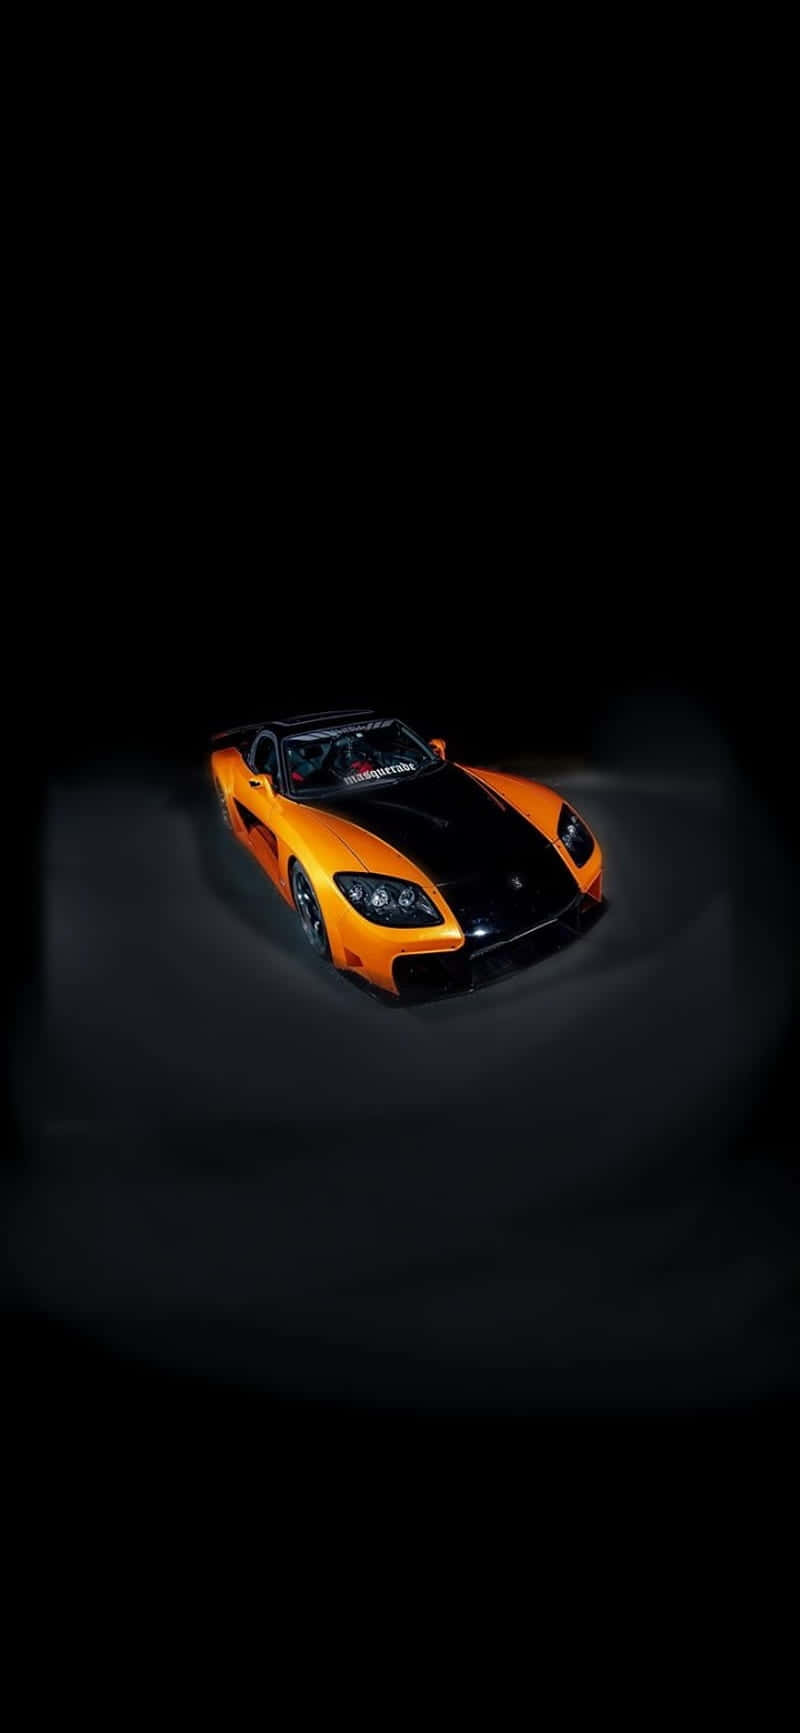 A Black And Orange Sports Car In The Dark Wallpaper